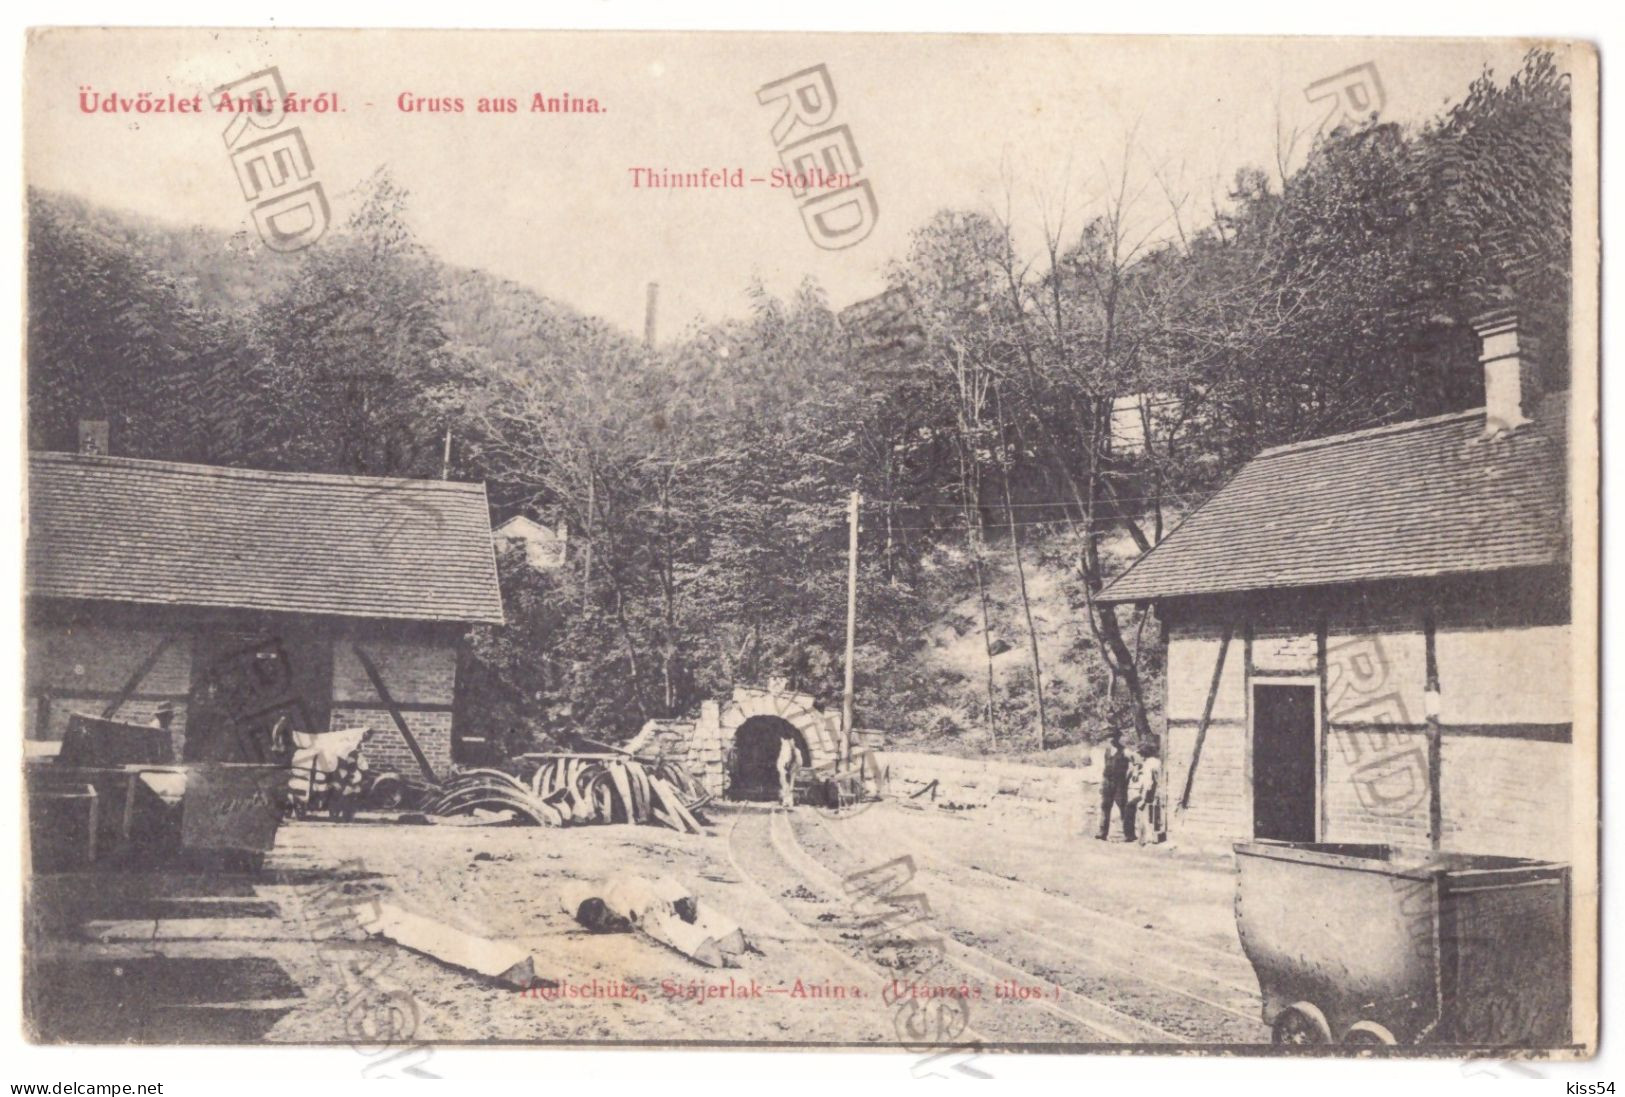 RO - 25433 ANINA, Caras-Severin, Tunnel To Mine, Romania - Old Postcard - Used - 1909 - Roumanie